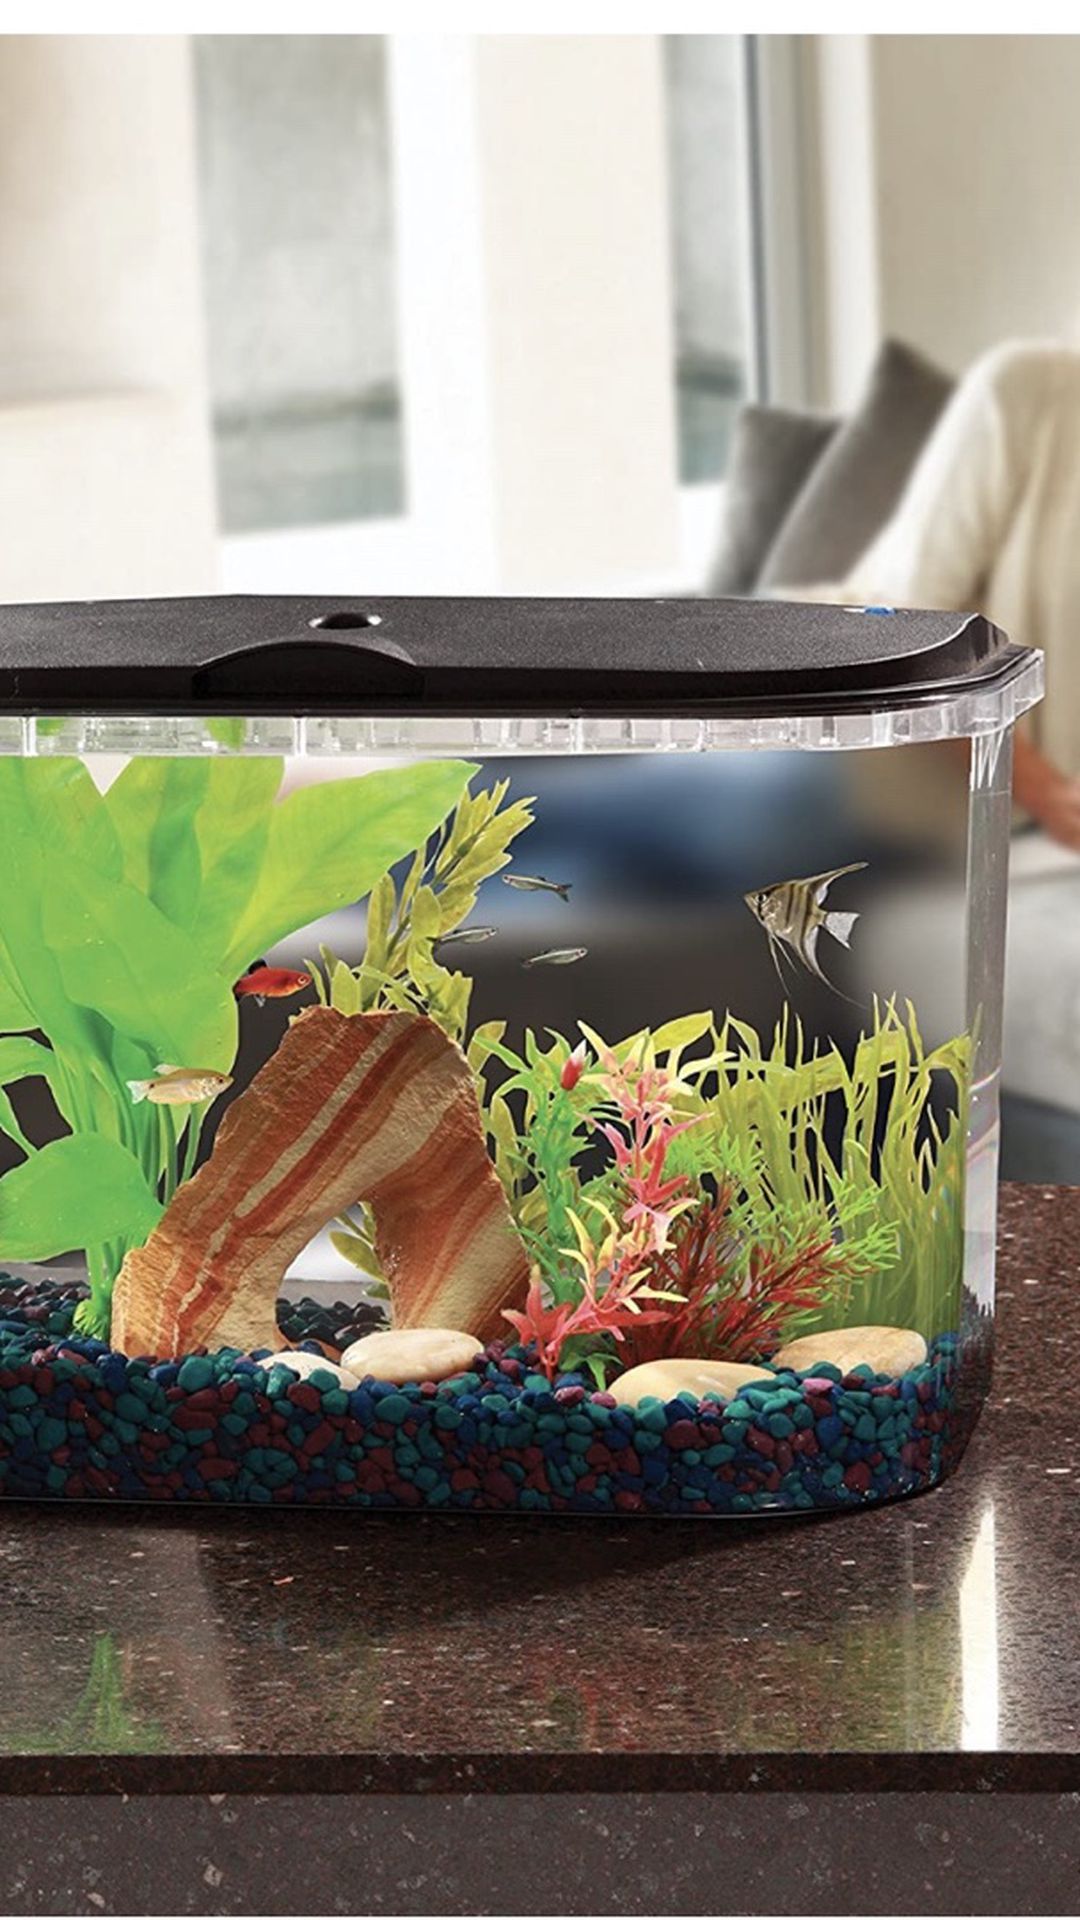 5 Gallon Fish Tank W/ Led Lights & Filter